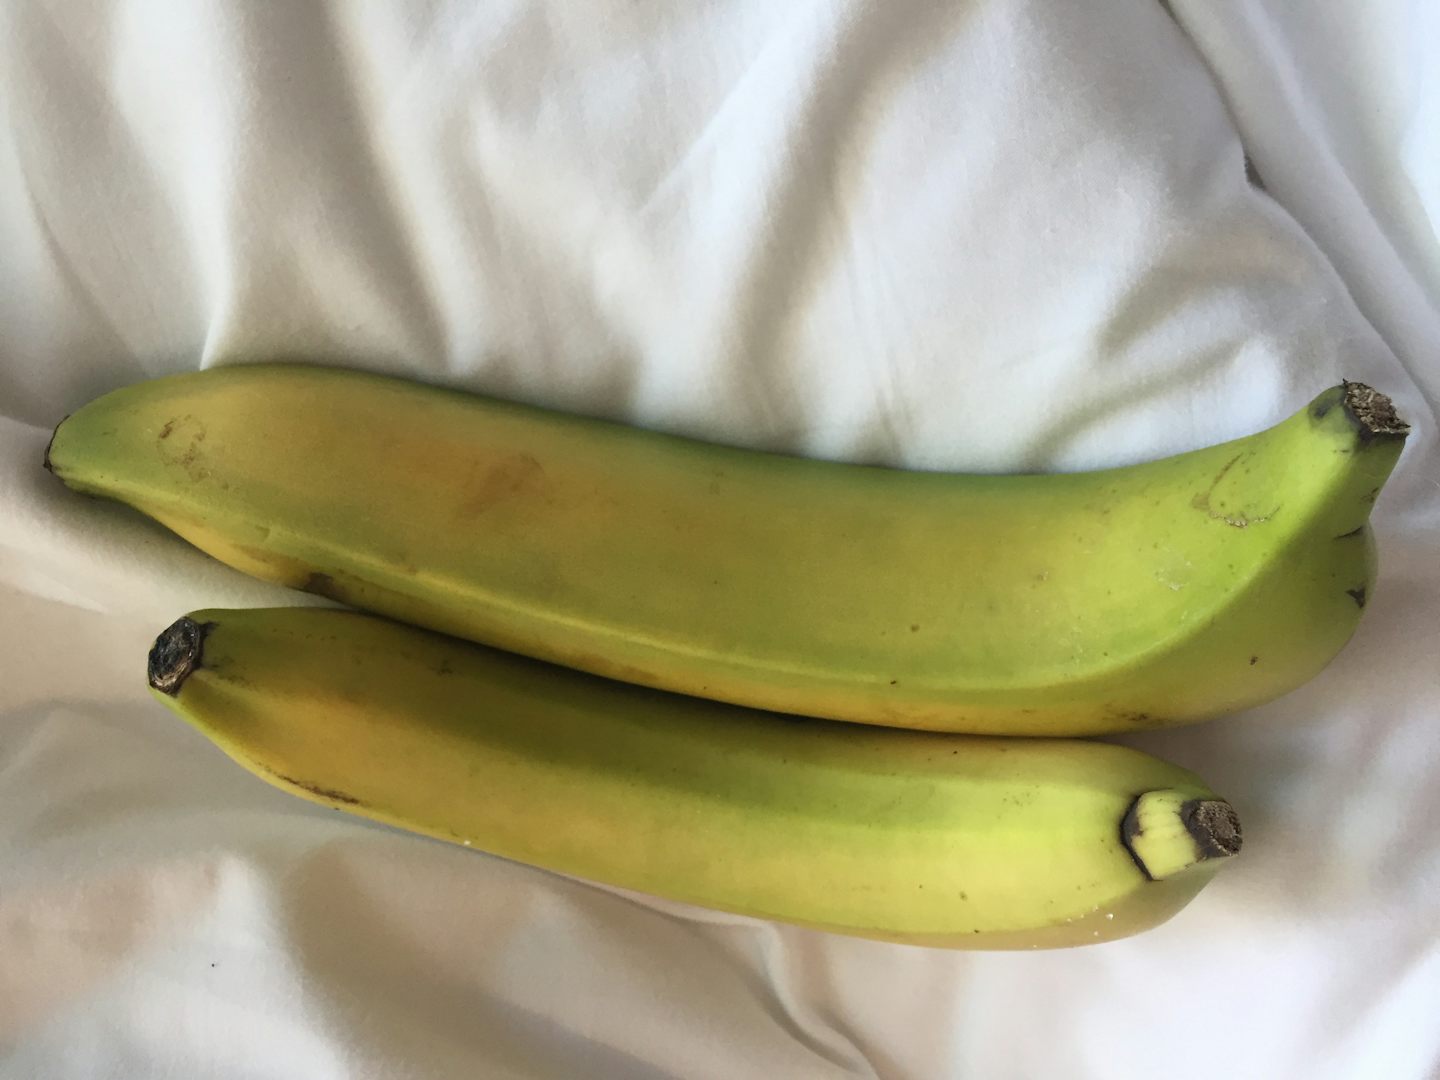 yummy green bananas